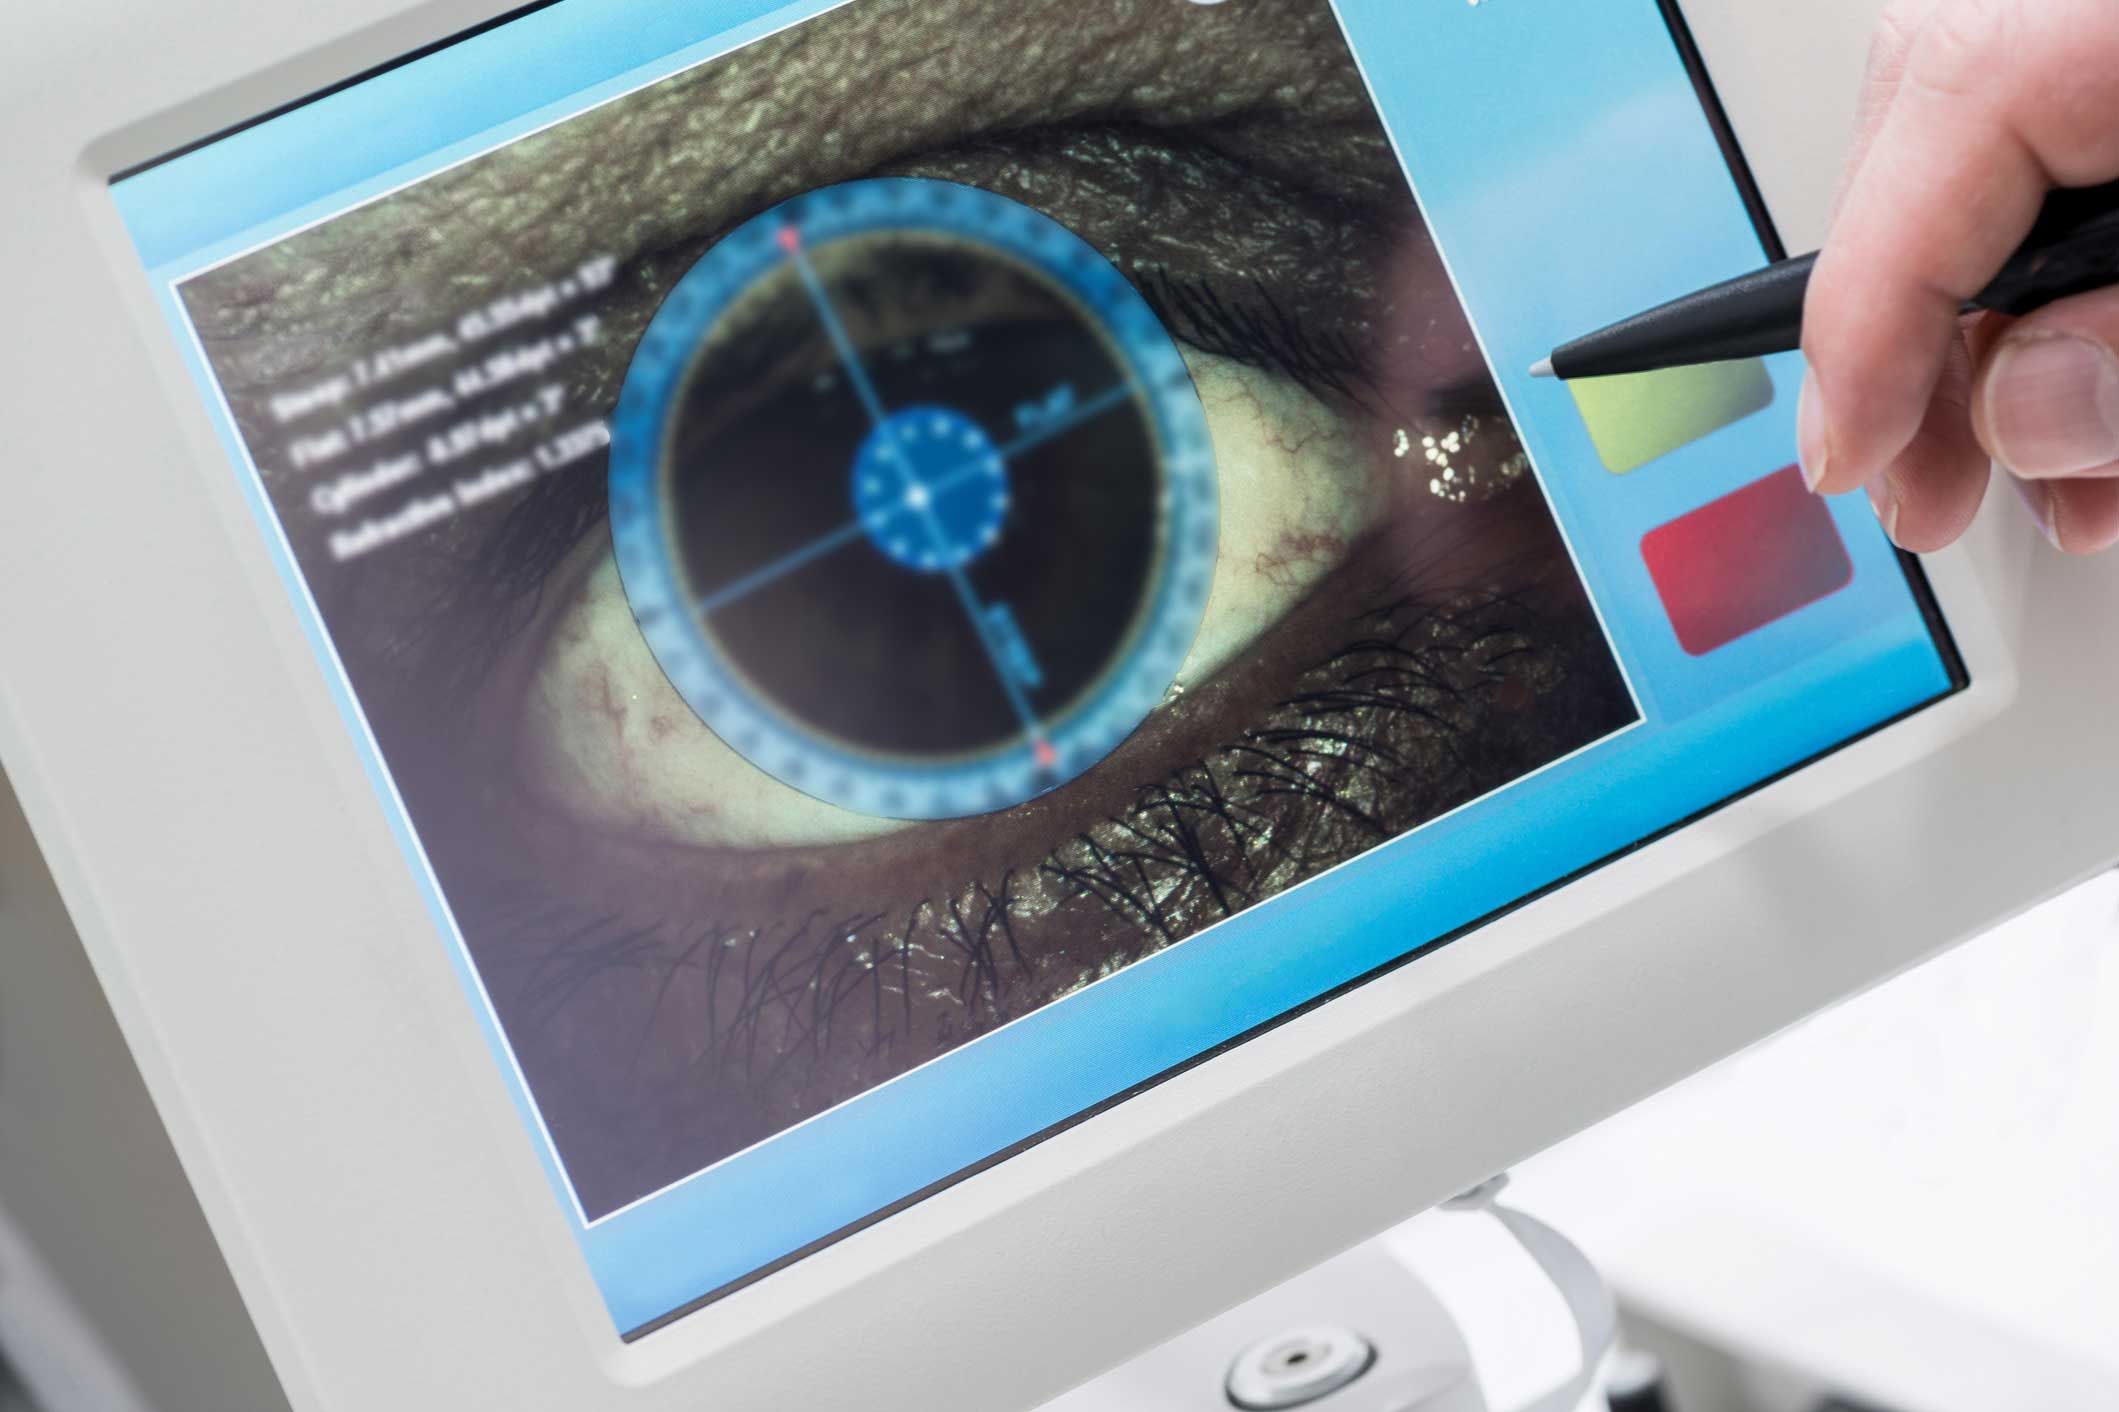 Optometrist checks patient's eye with retinoscope